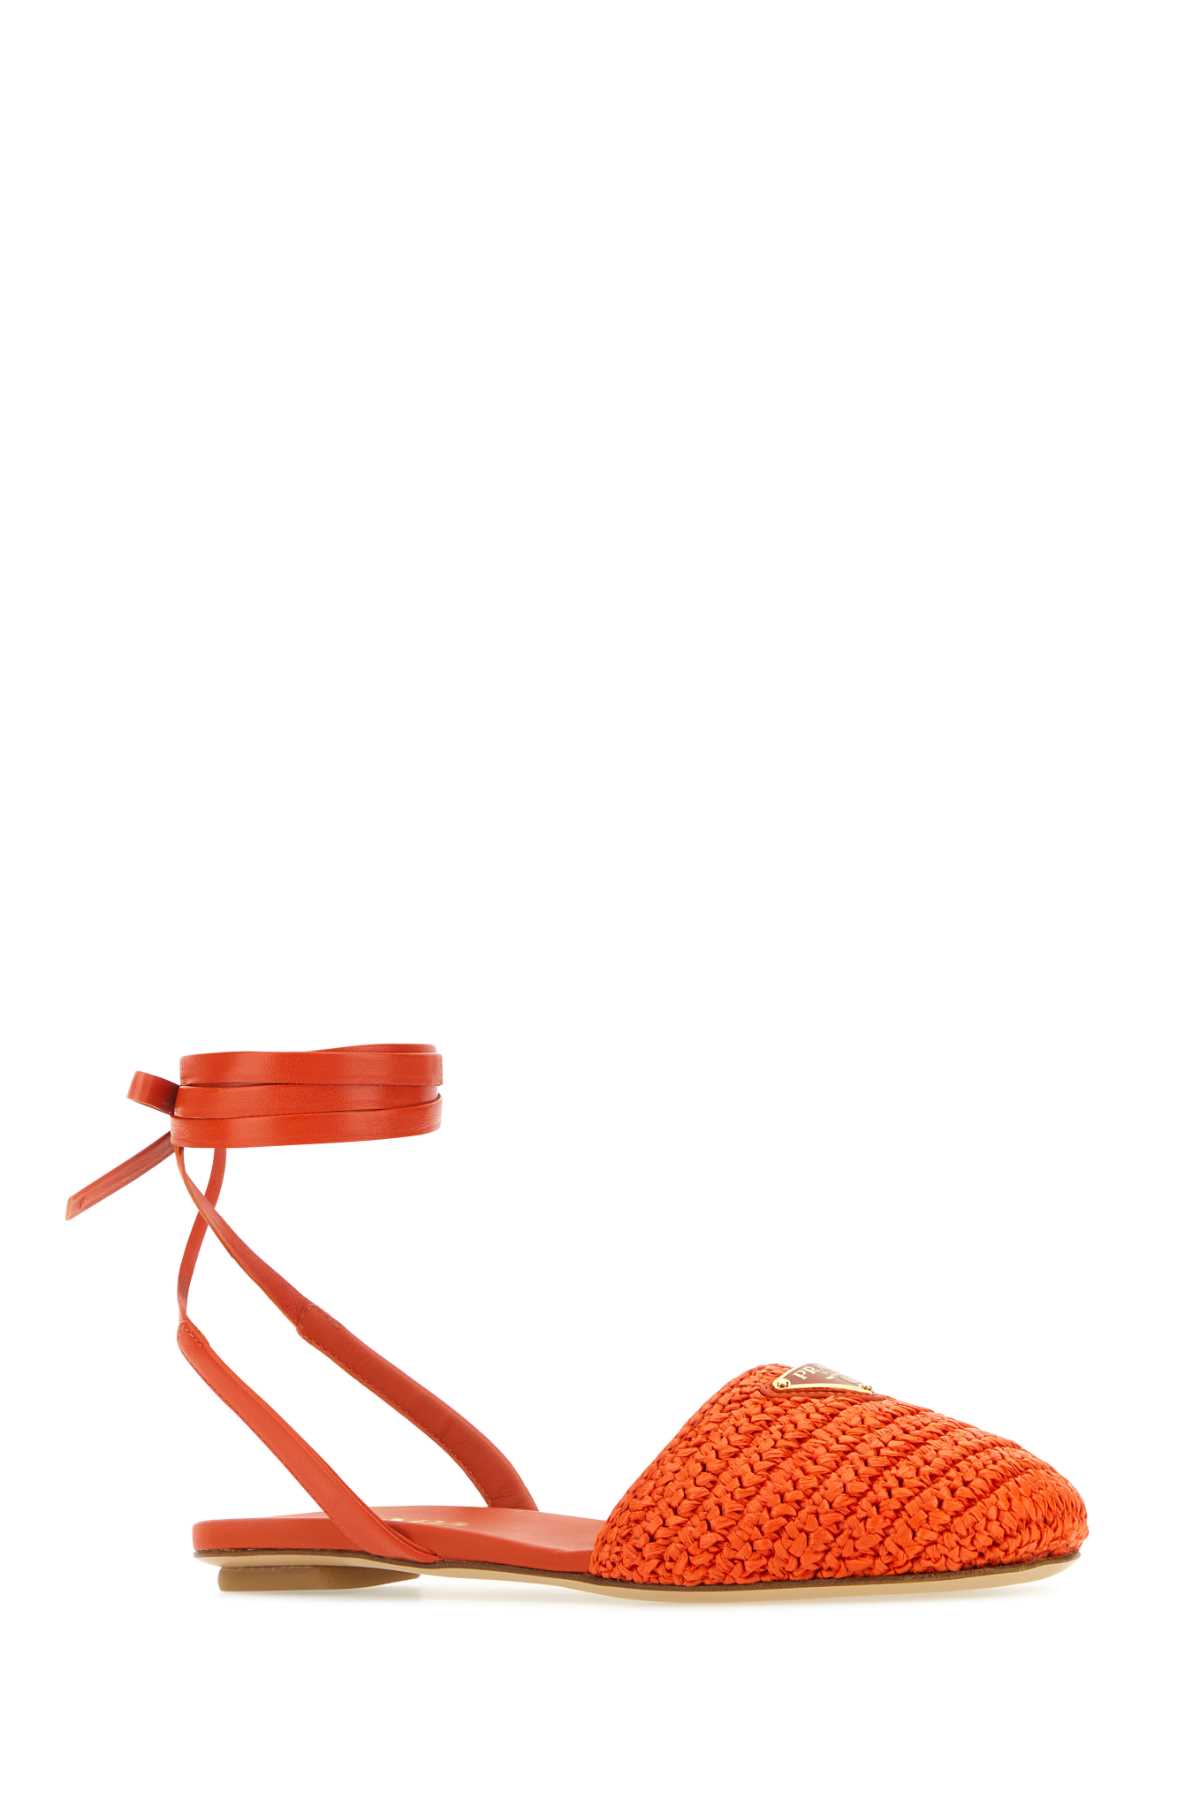 Prada Orange Raffia Sandals